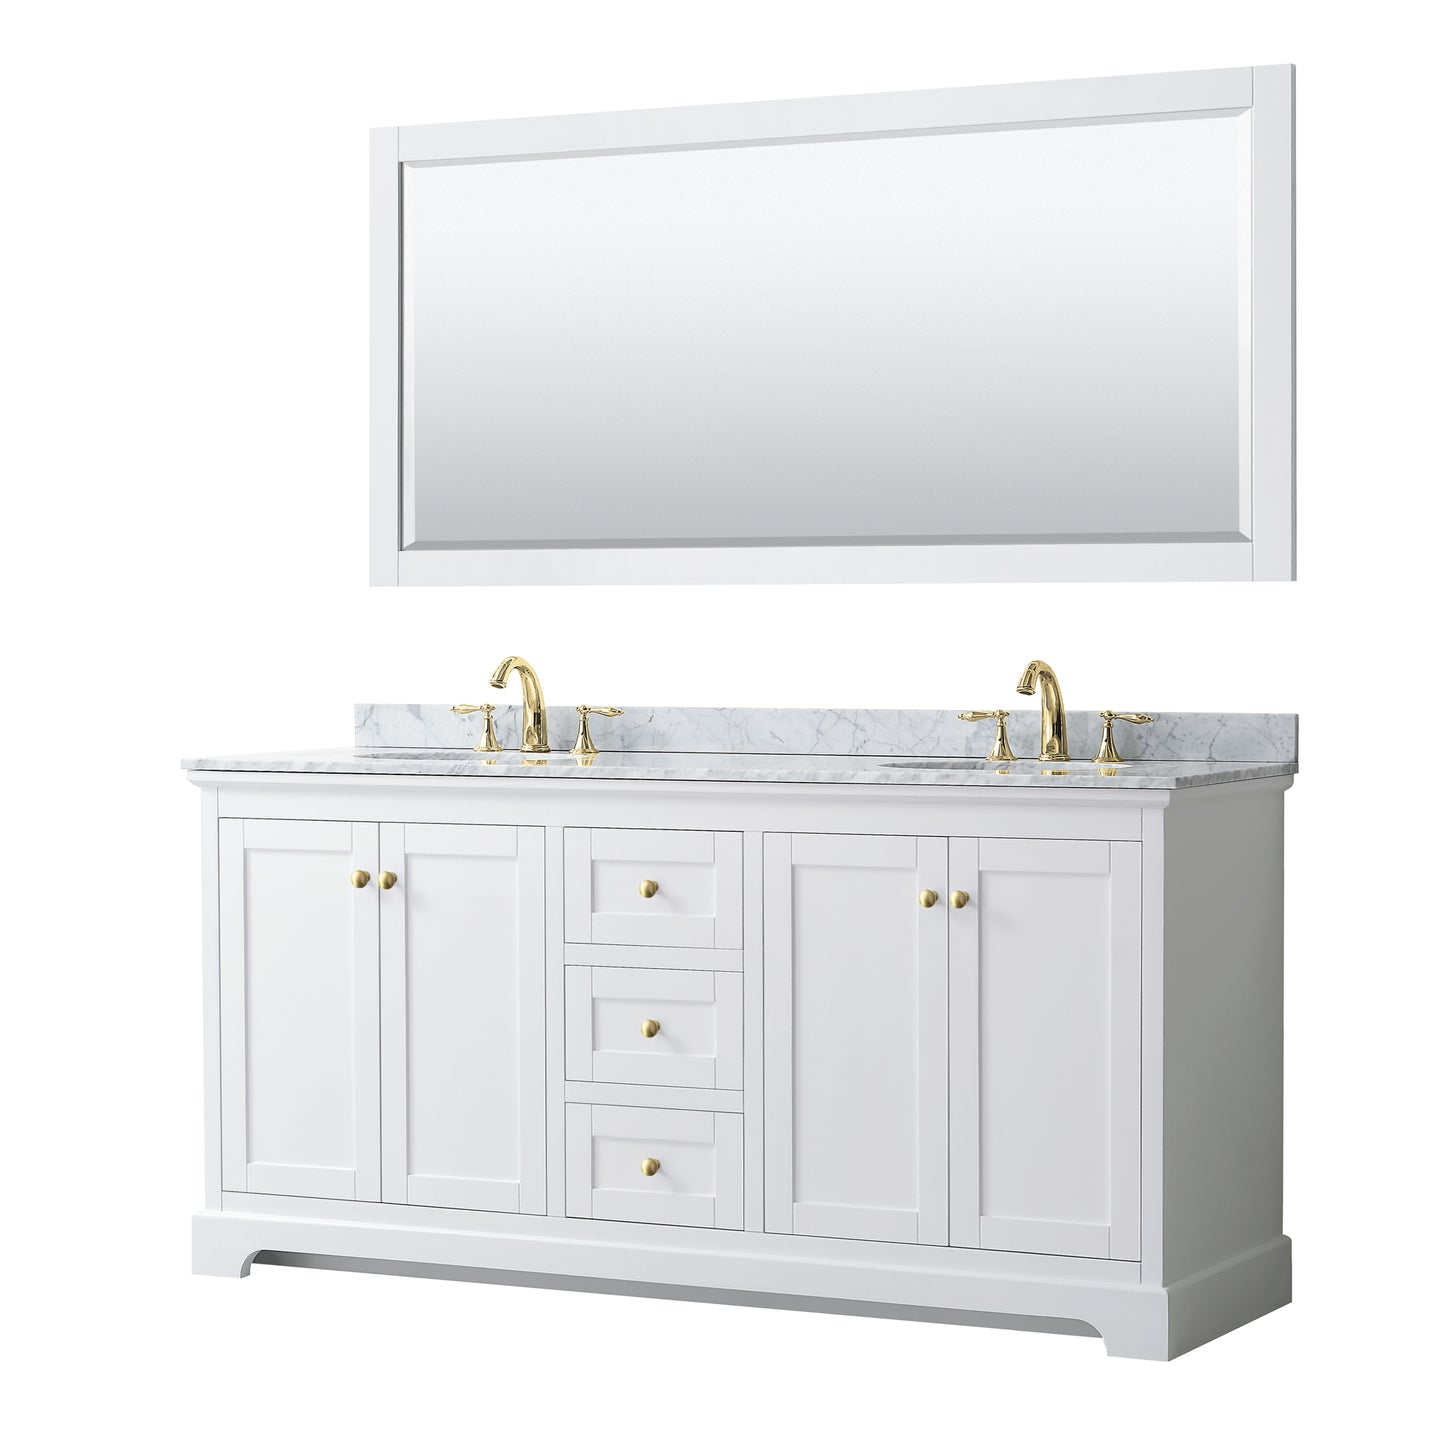 Wyndham Avery 72 Inch Double Bathroom Vanity with Brushed Gold Trim Hardware - Luxe Bathroom Vanities